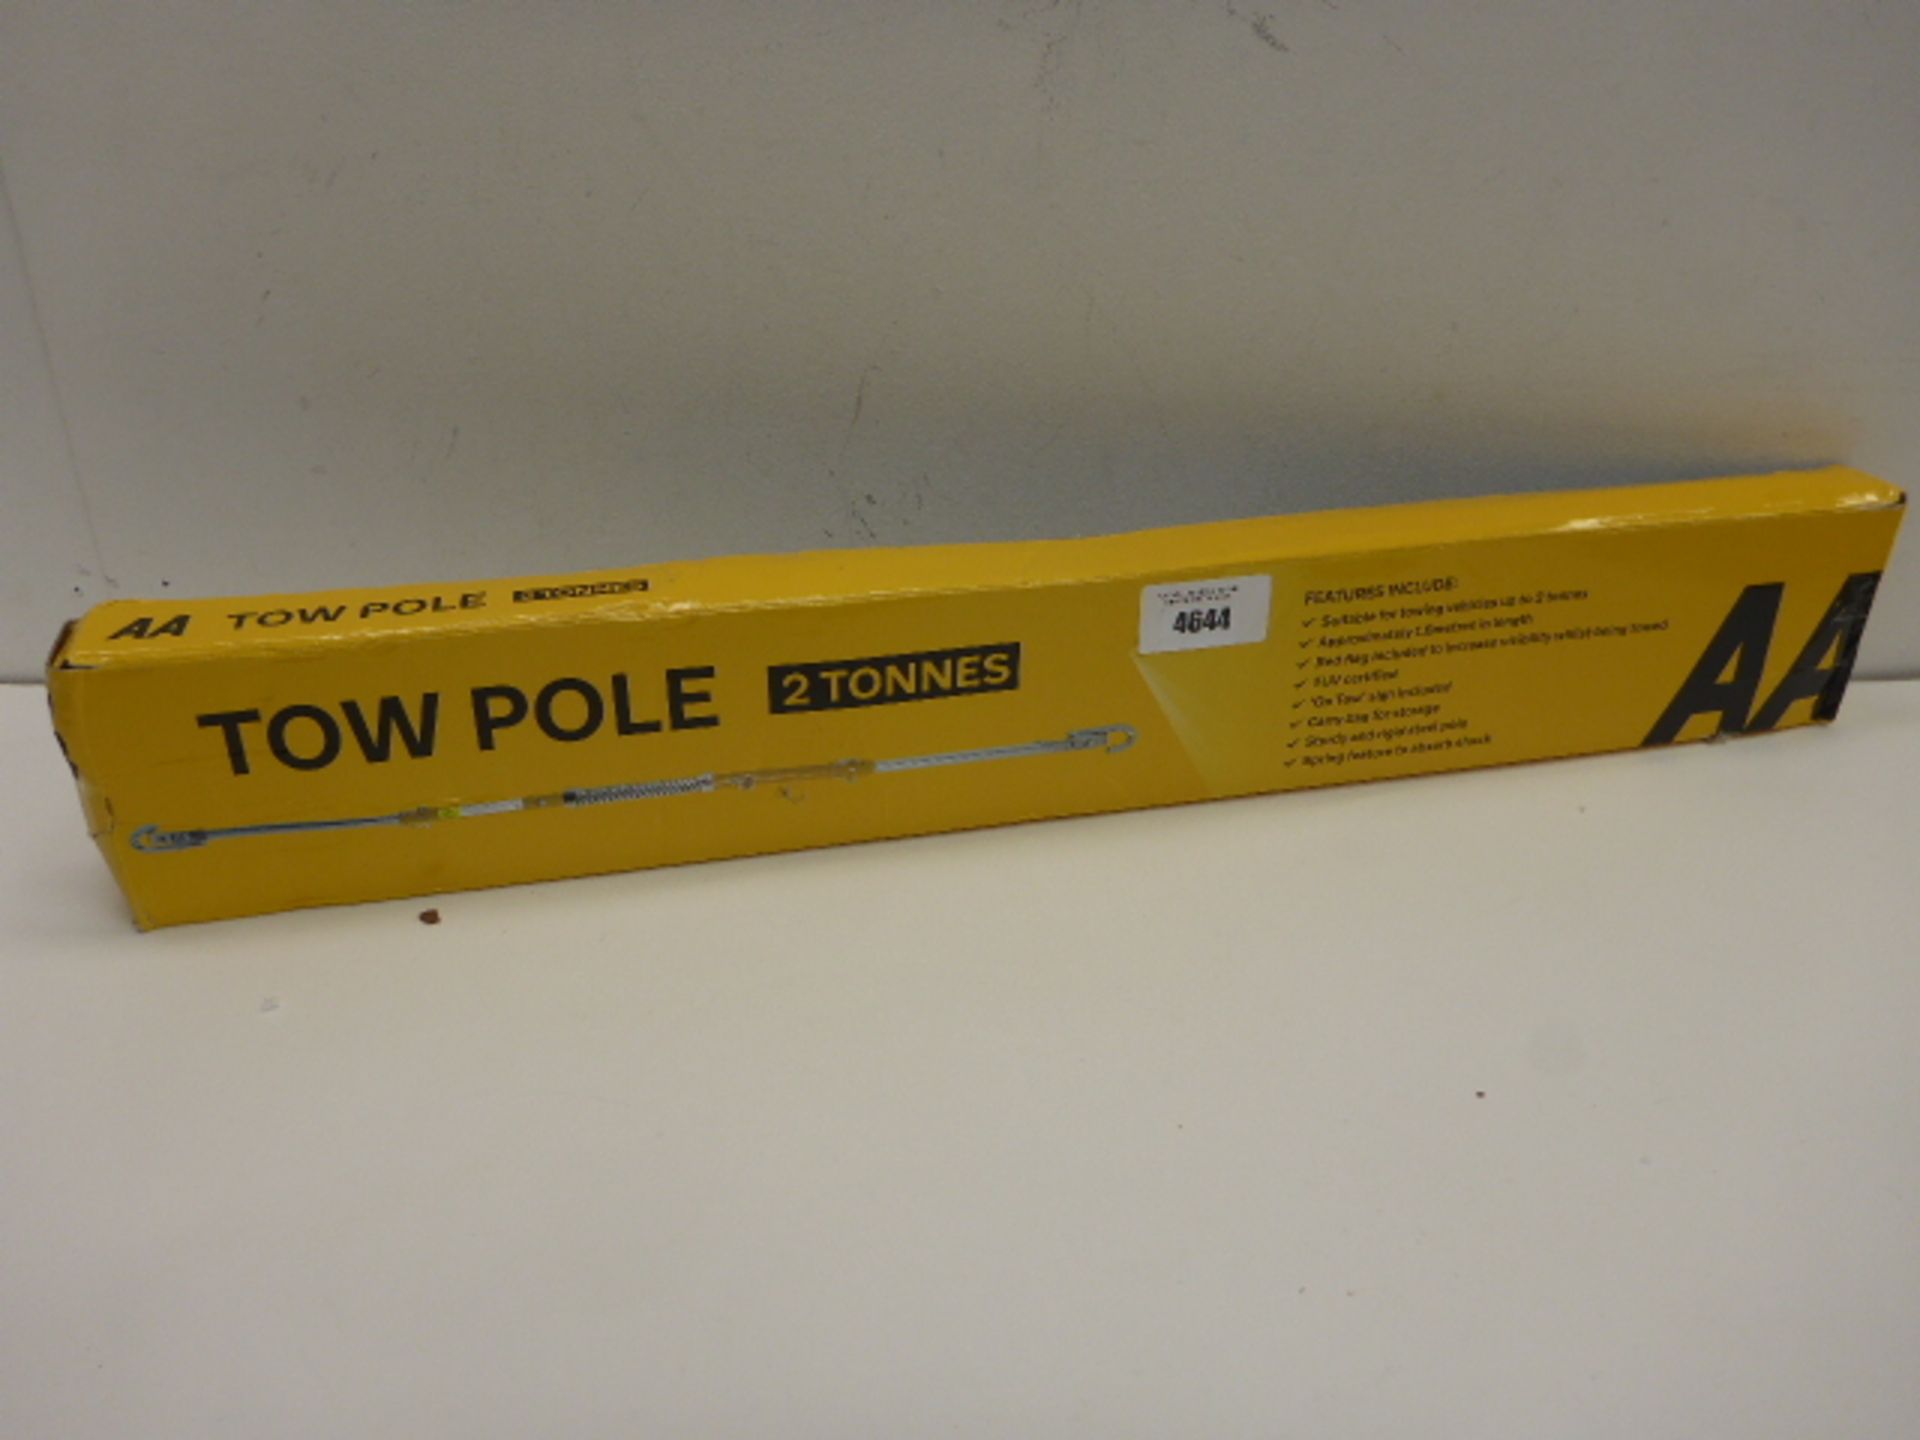 AA 2 tonnes tow pole